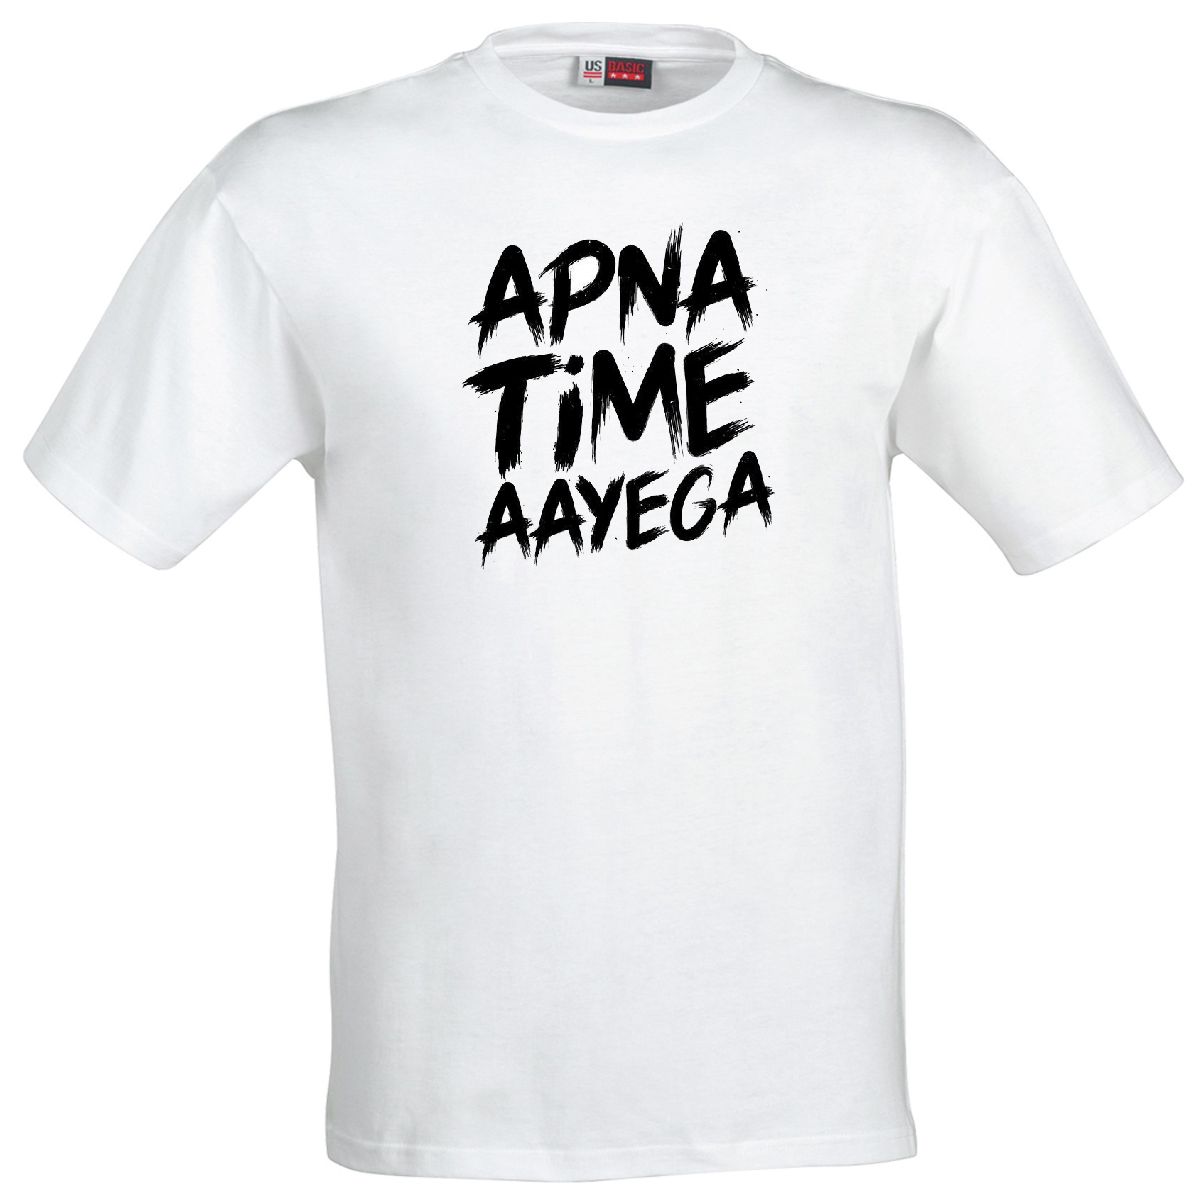 Apna Time Aayega T-Shirt